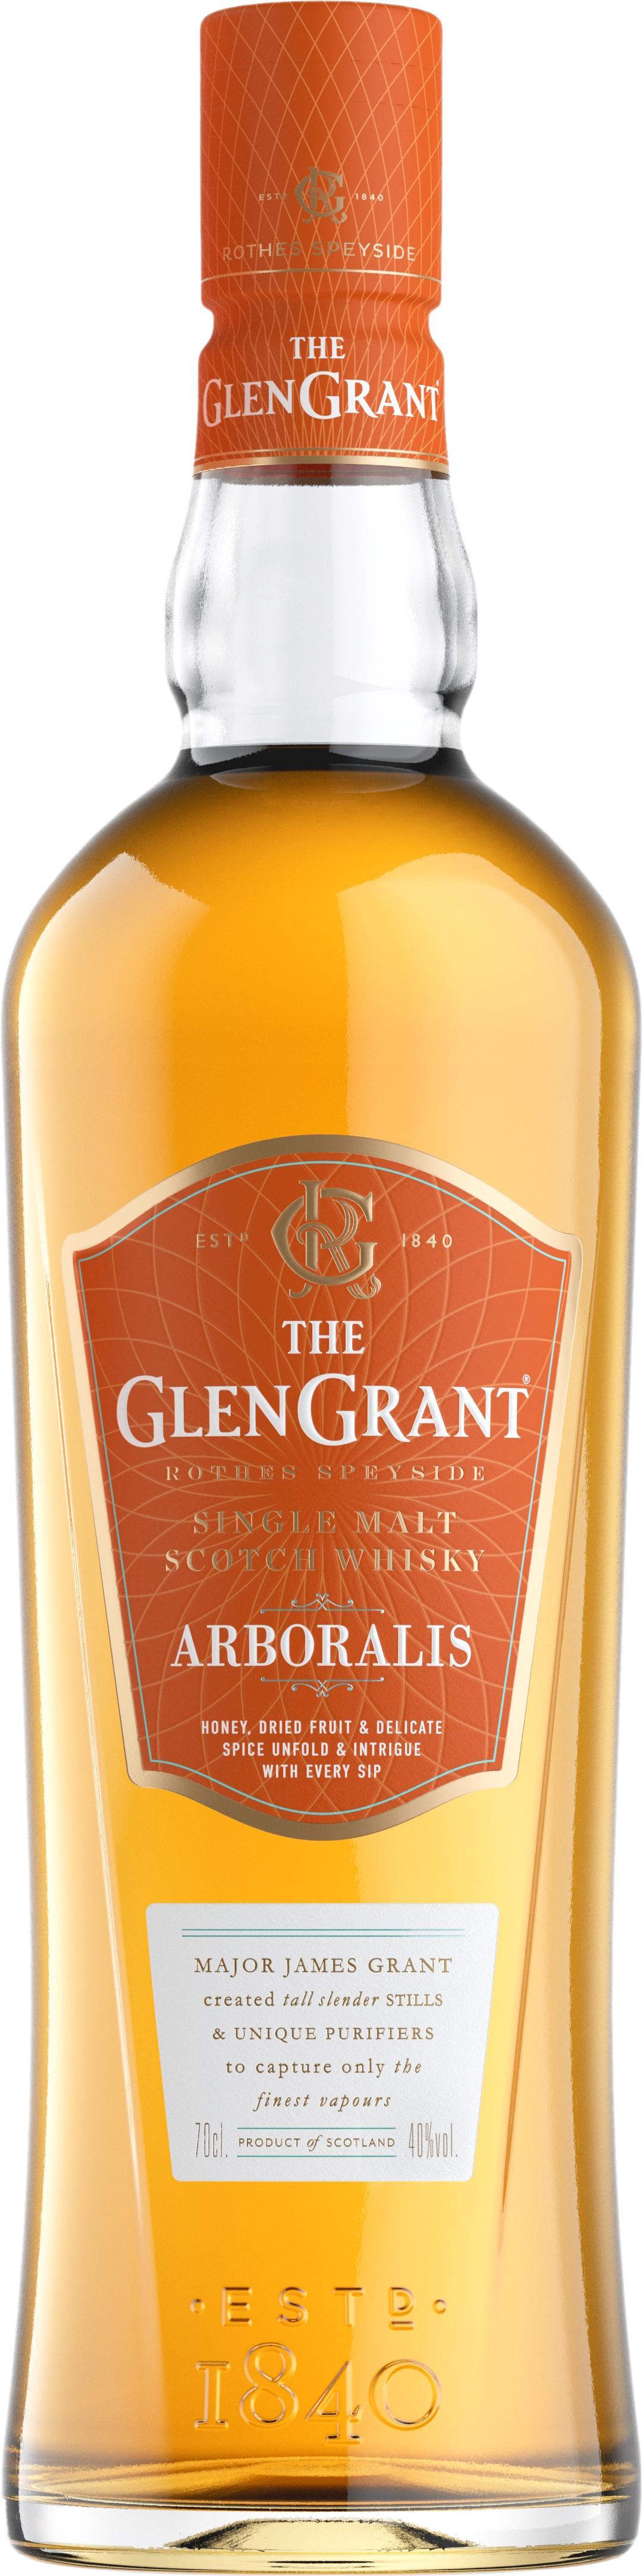 Rượu Glen Grant Arboralis Scotch Whisky Single Malt 40% 1x0.7L